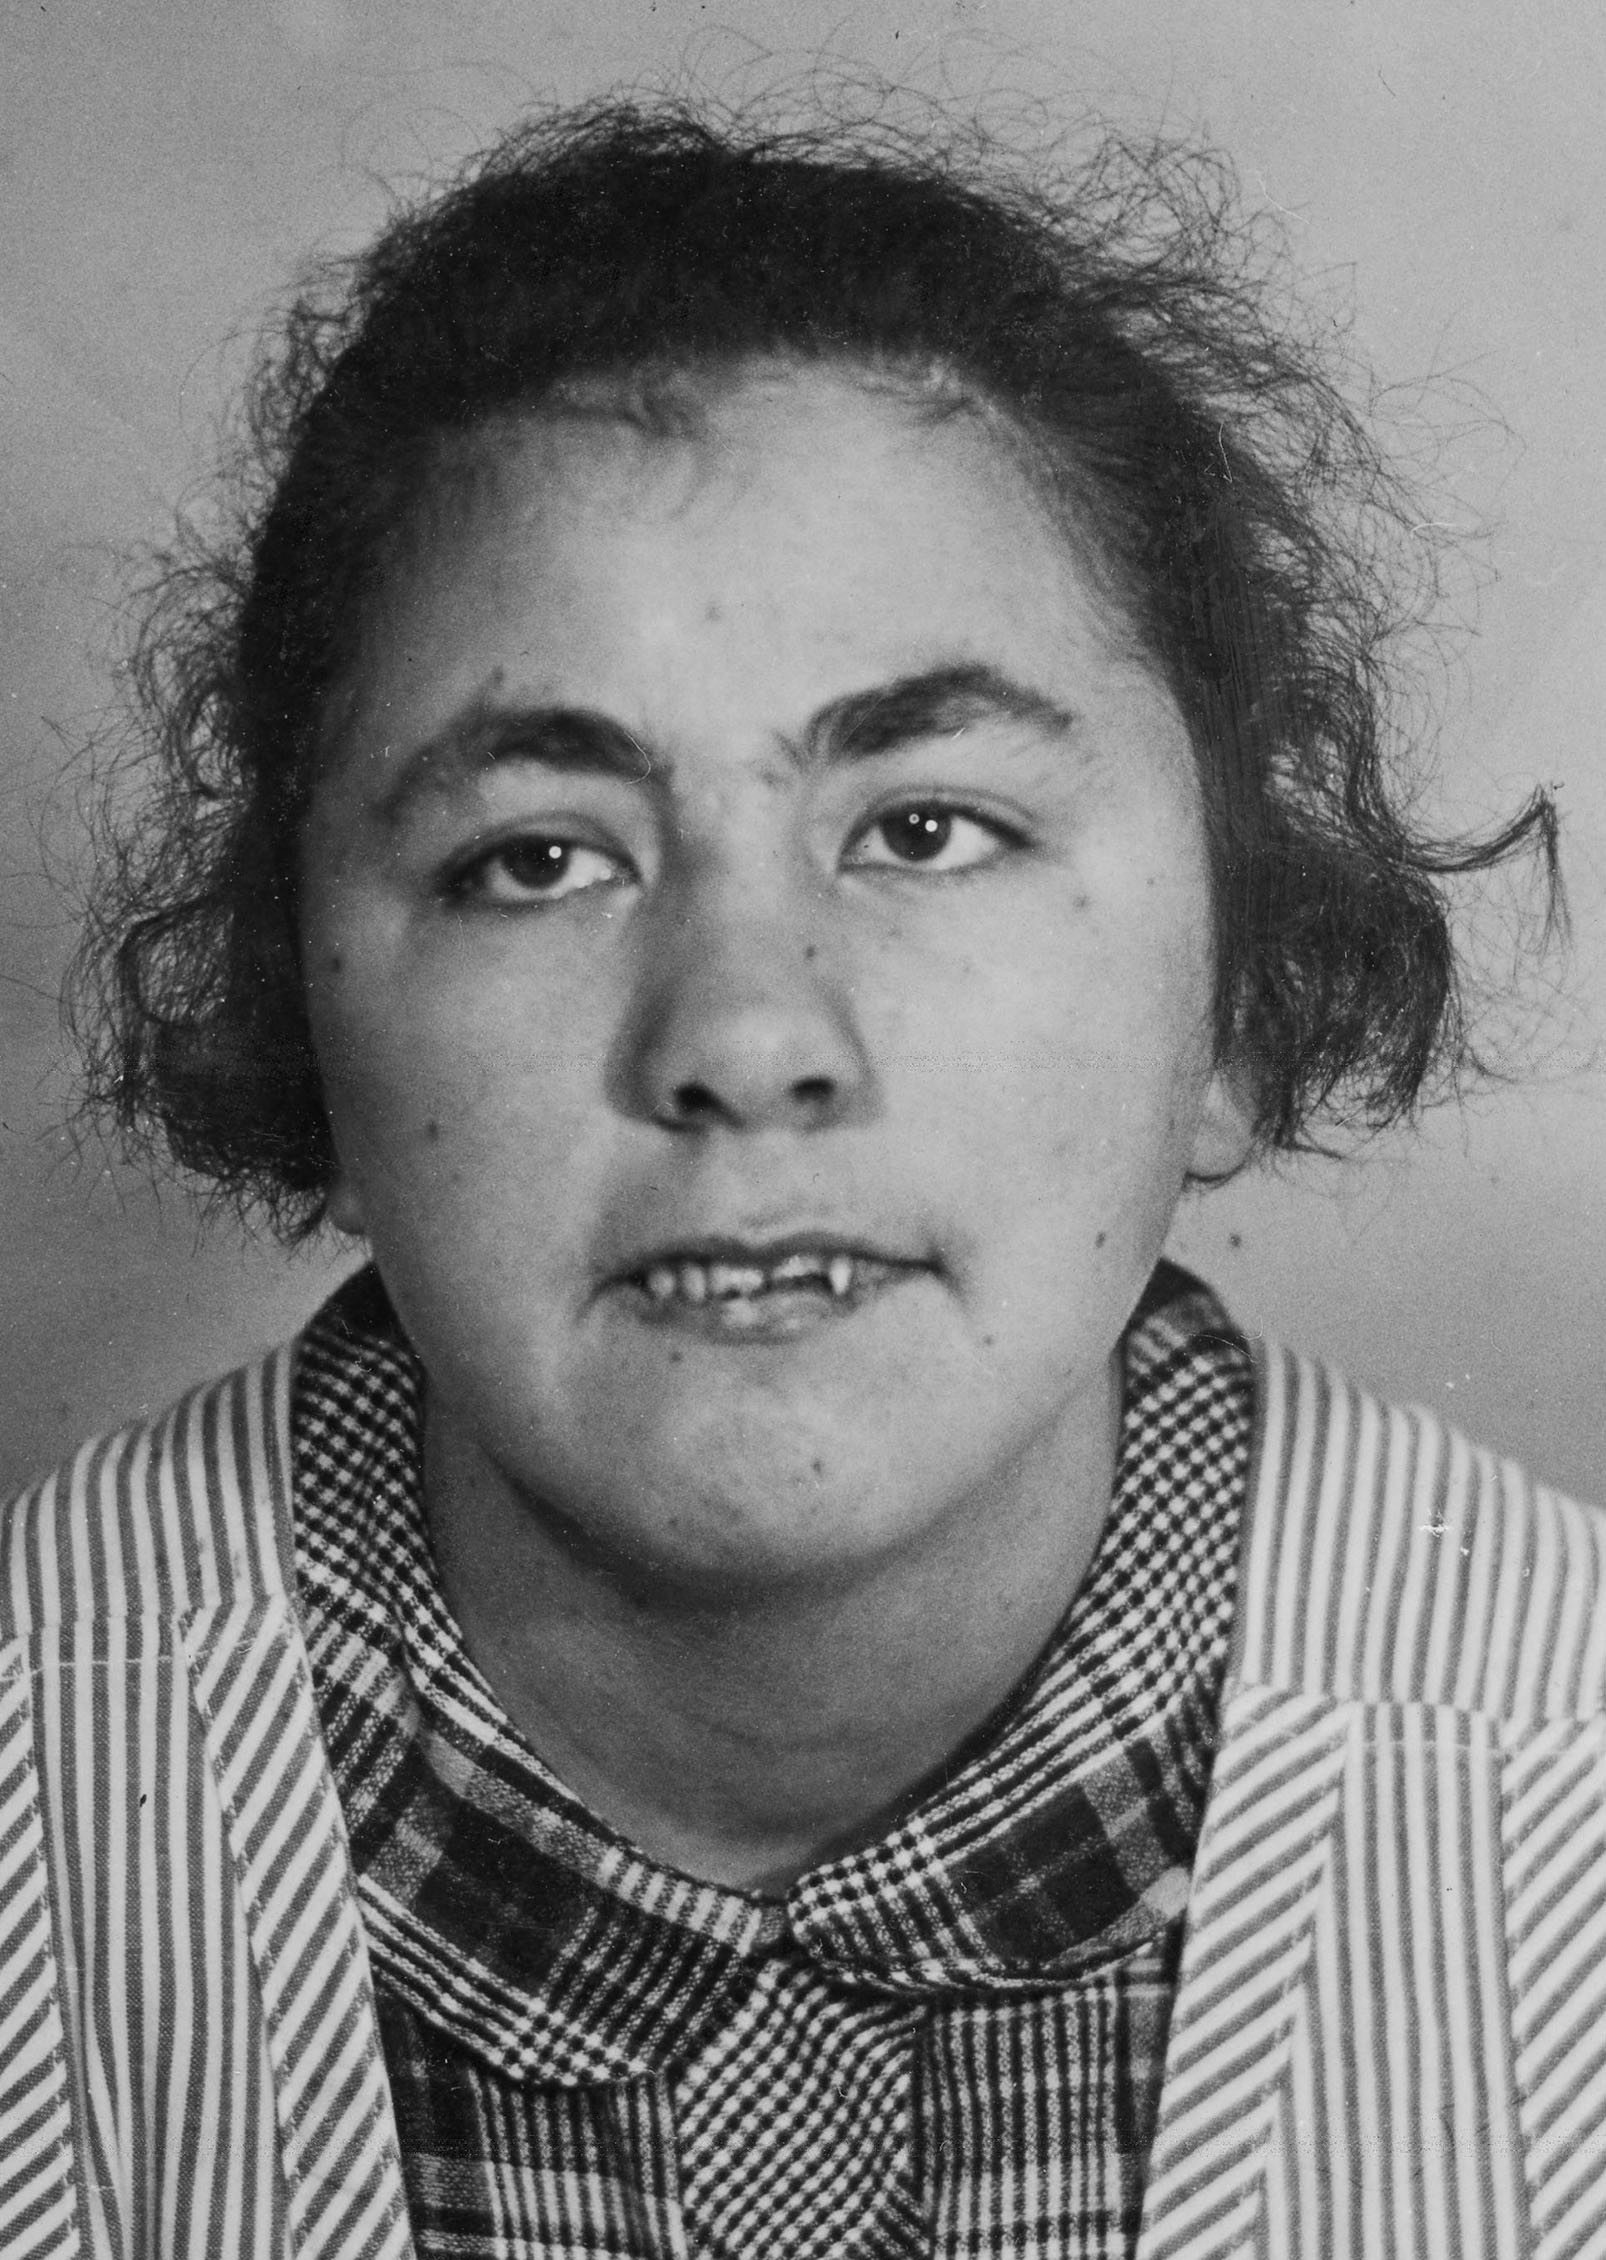 Erna Strssmann, 1939